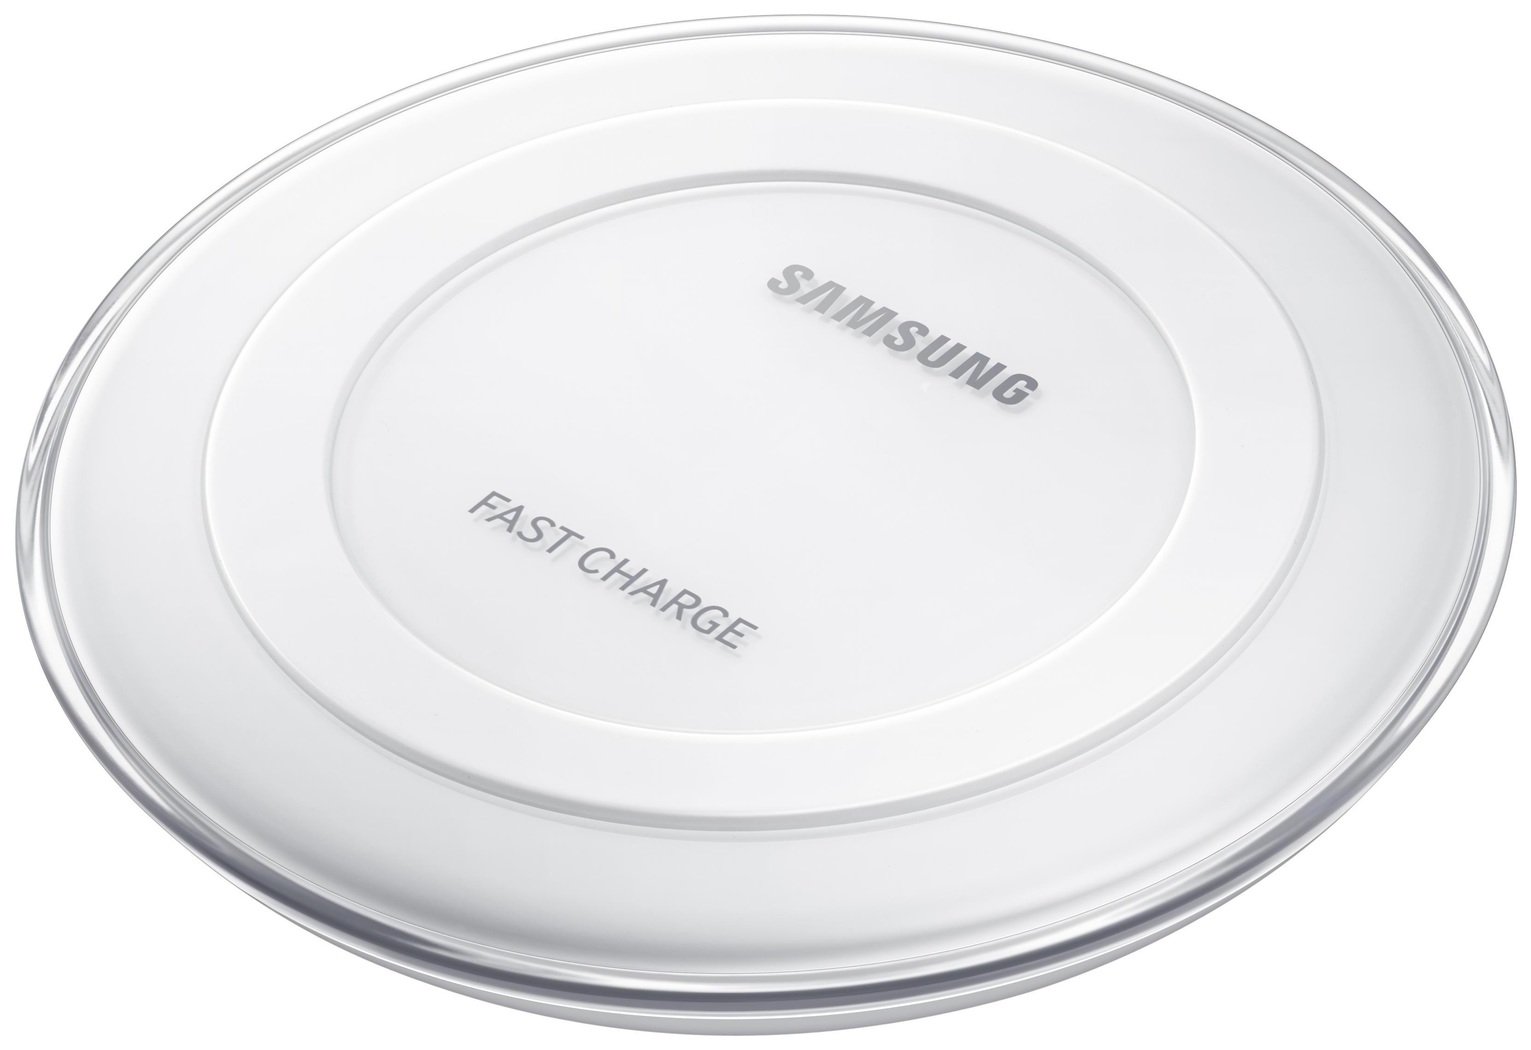 Samsung AFC Wireless Charging Pad - White